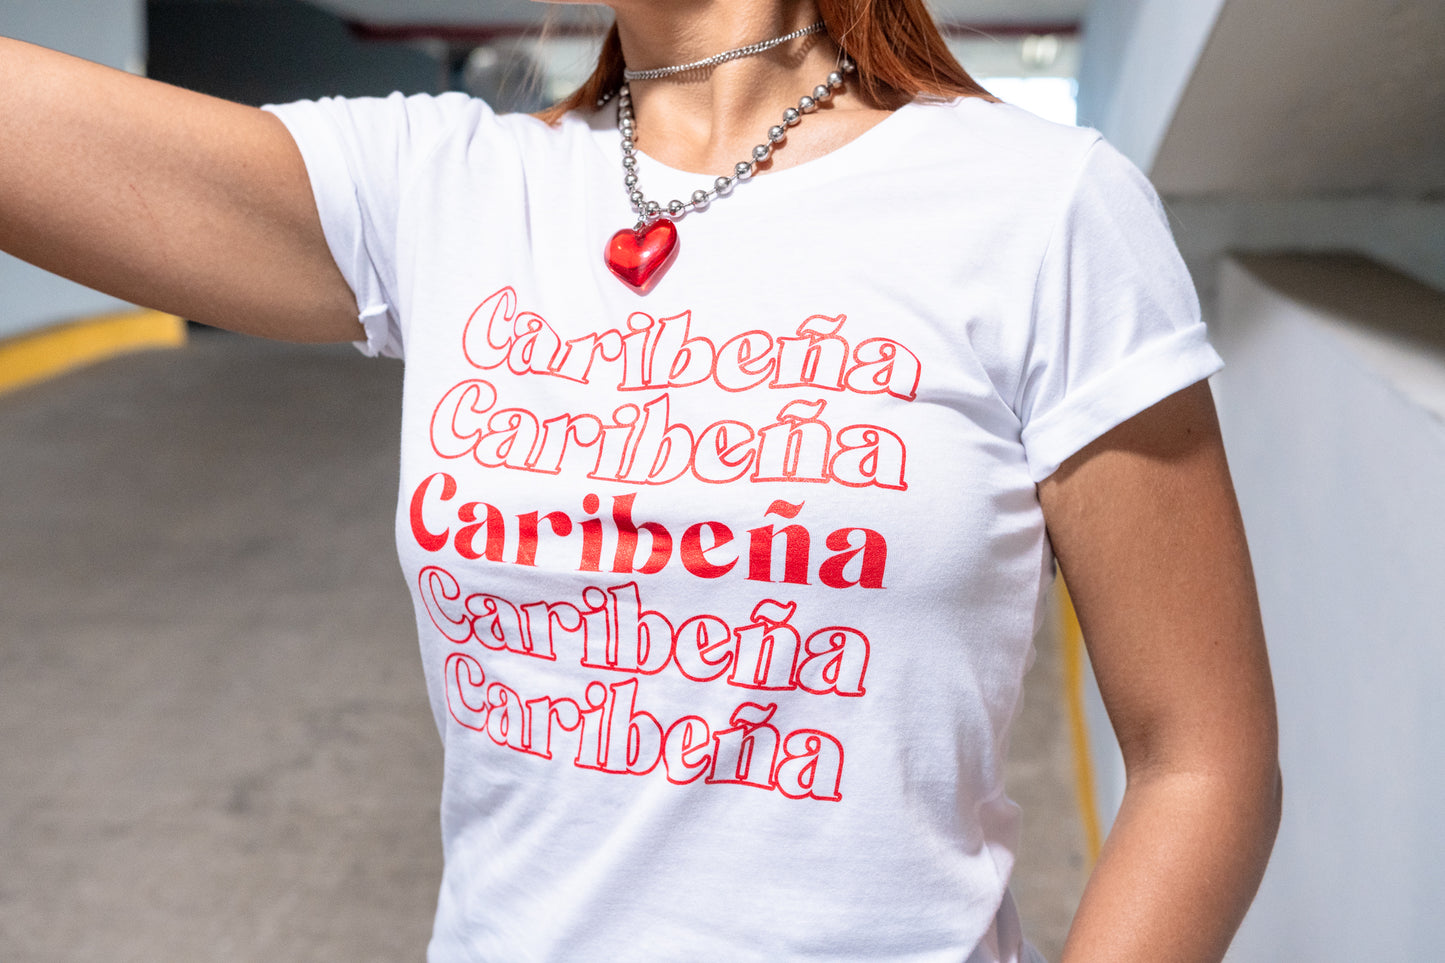 Caribeña T-shirt